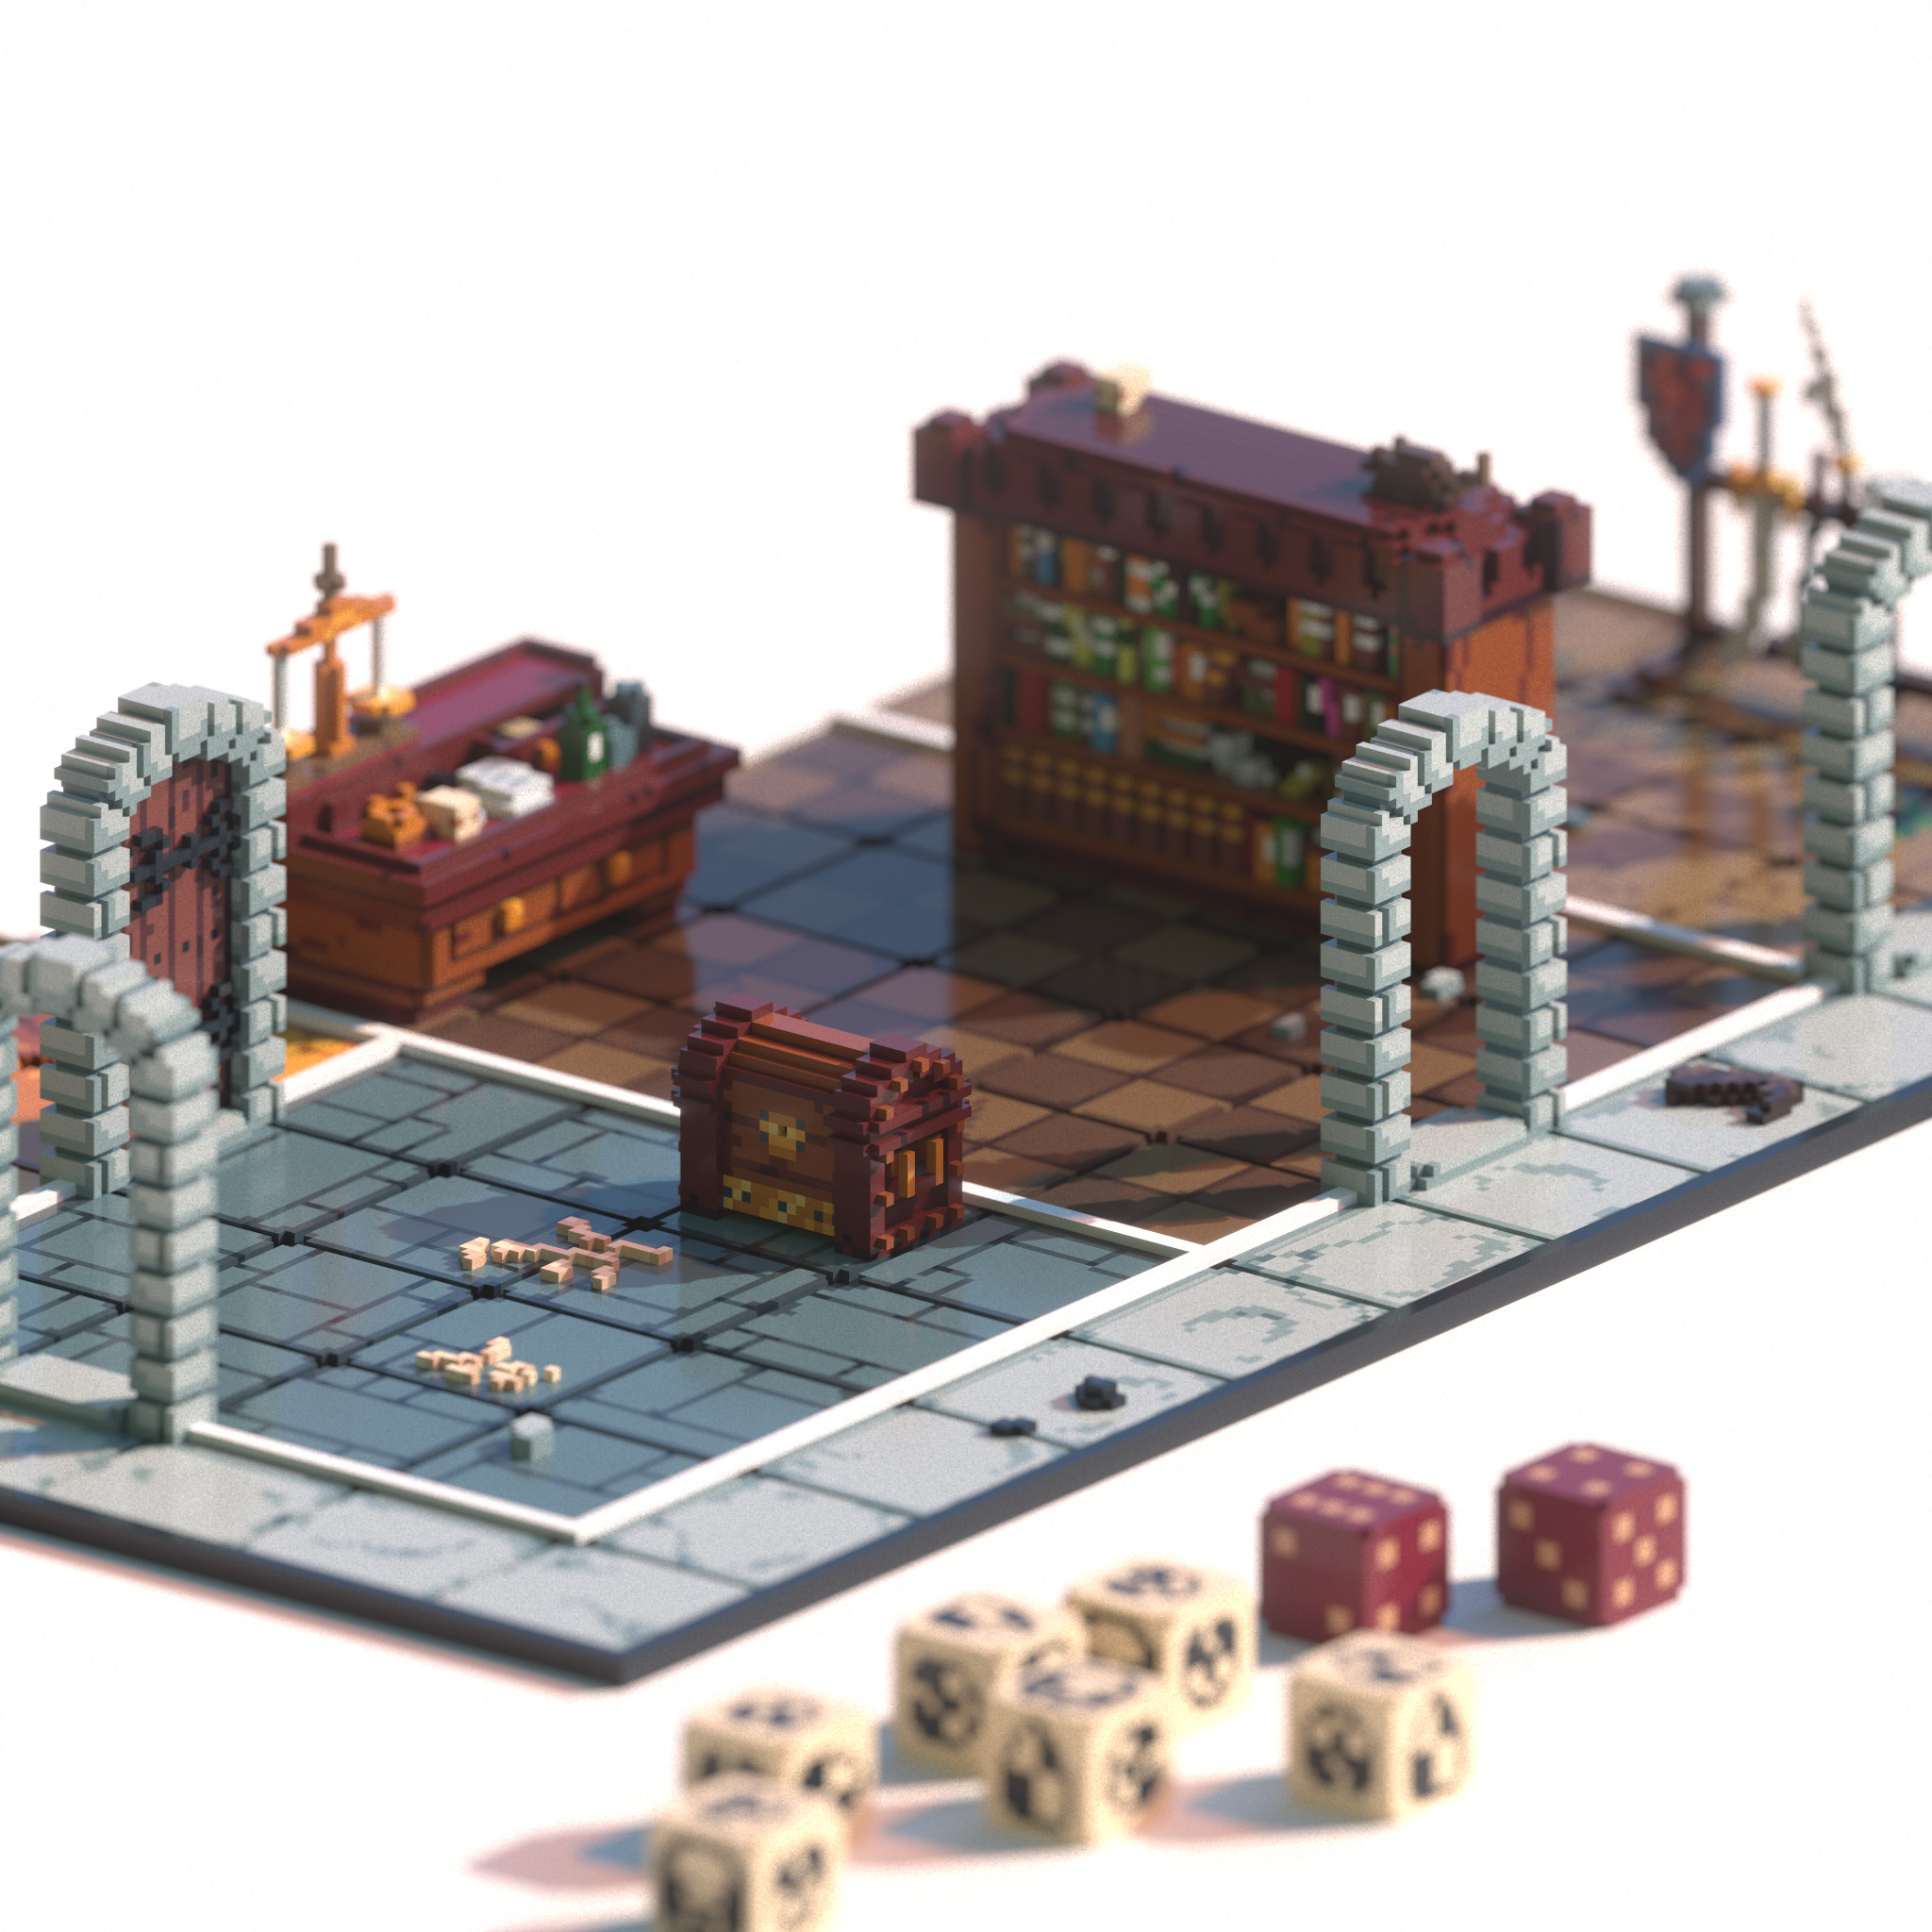 Voxel model rendering of select HeroQuest game board assets.